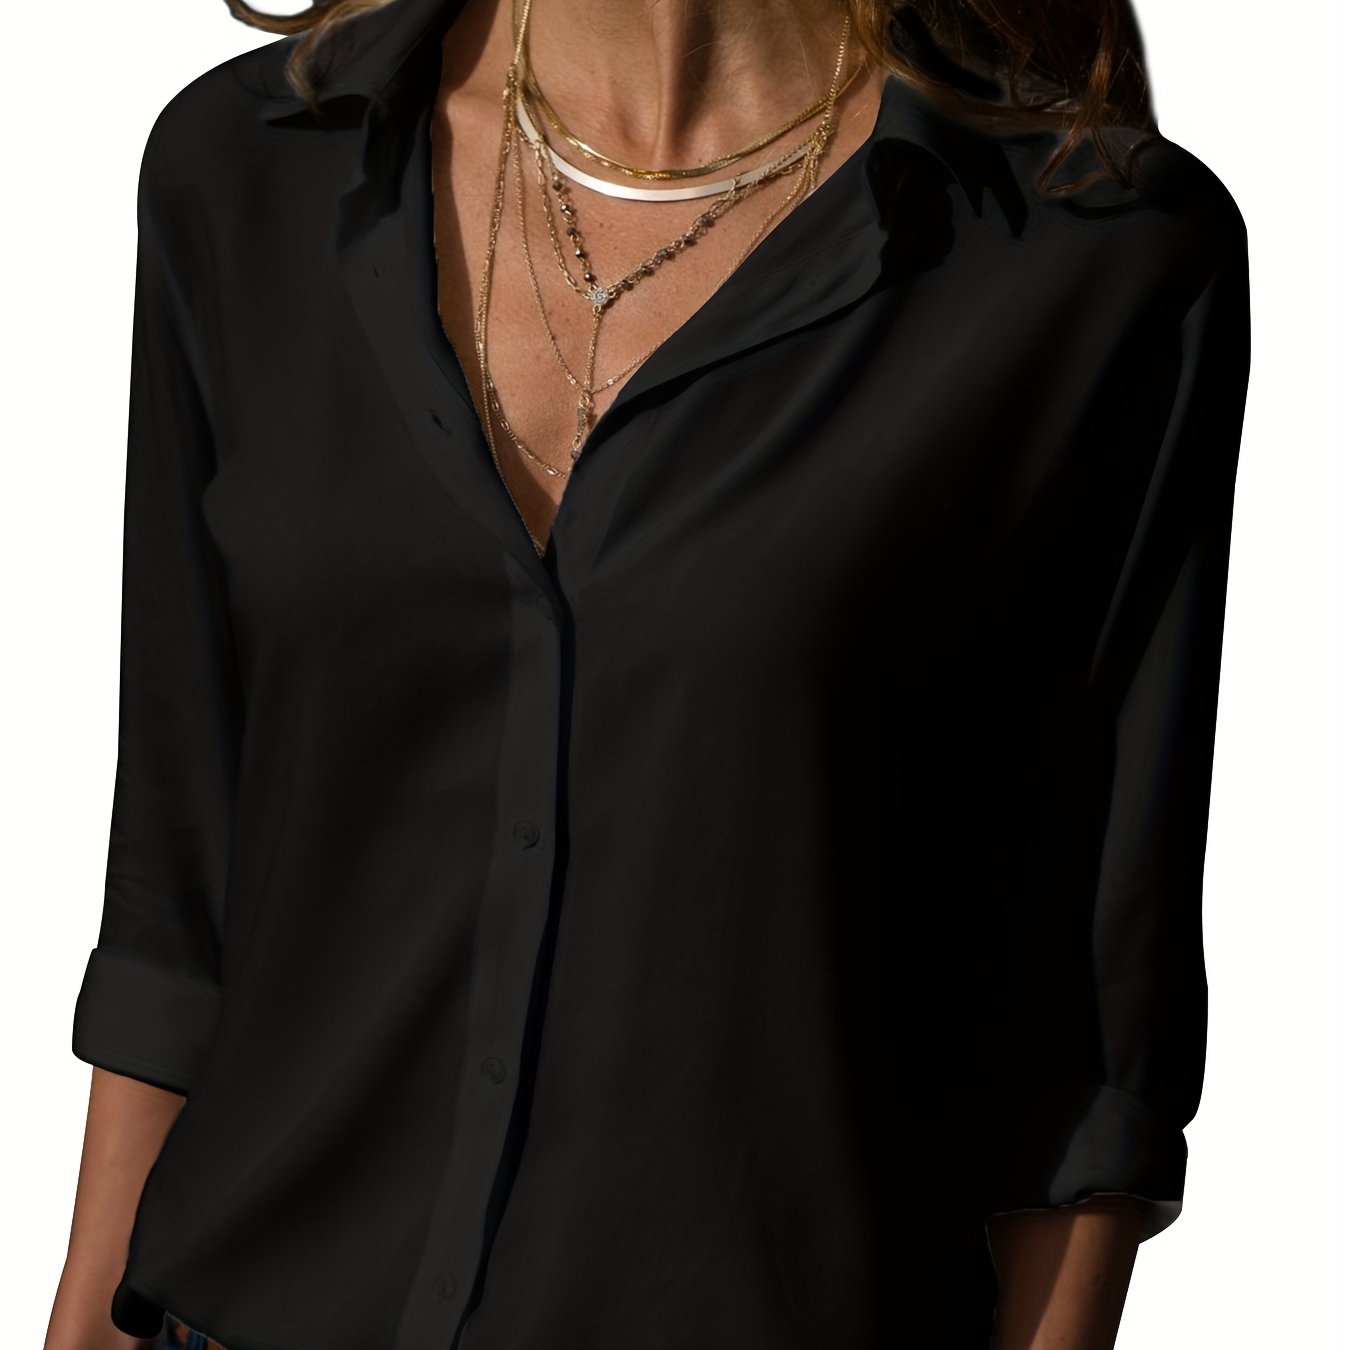 Versatile Solid Shirt, Casual Button Front Long Sleeve Collar Shirt, Women's Clothing